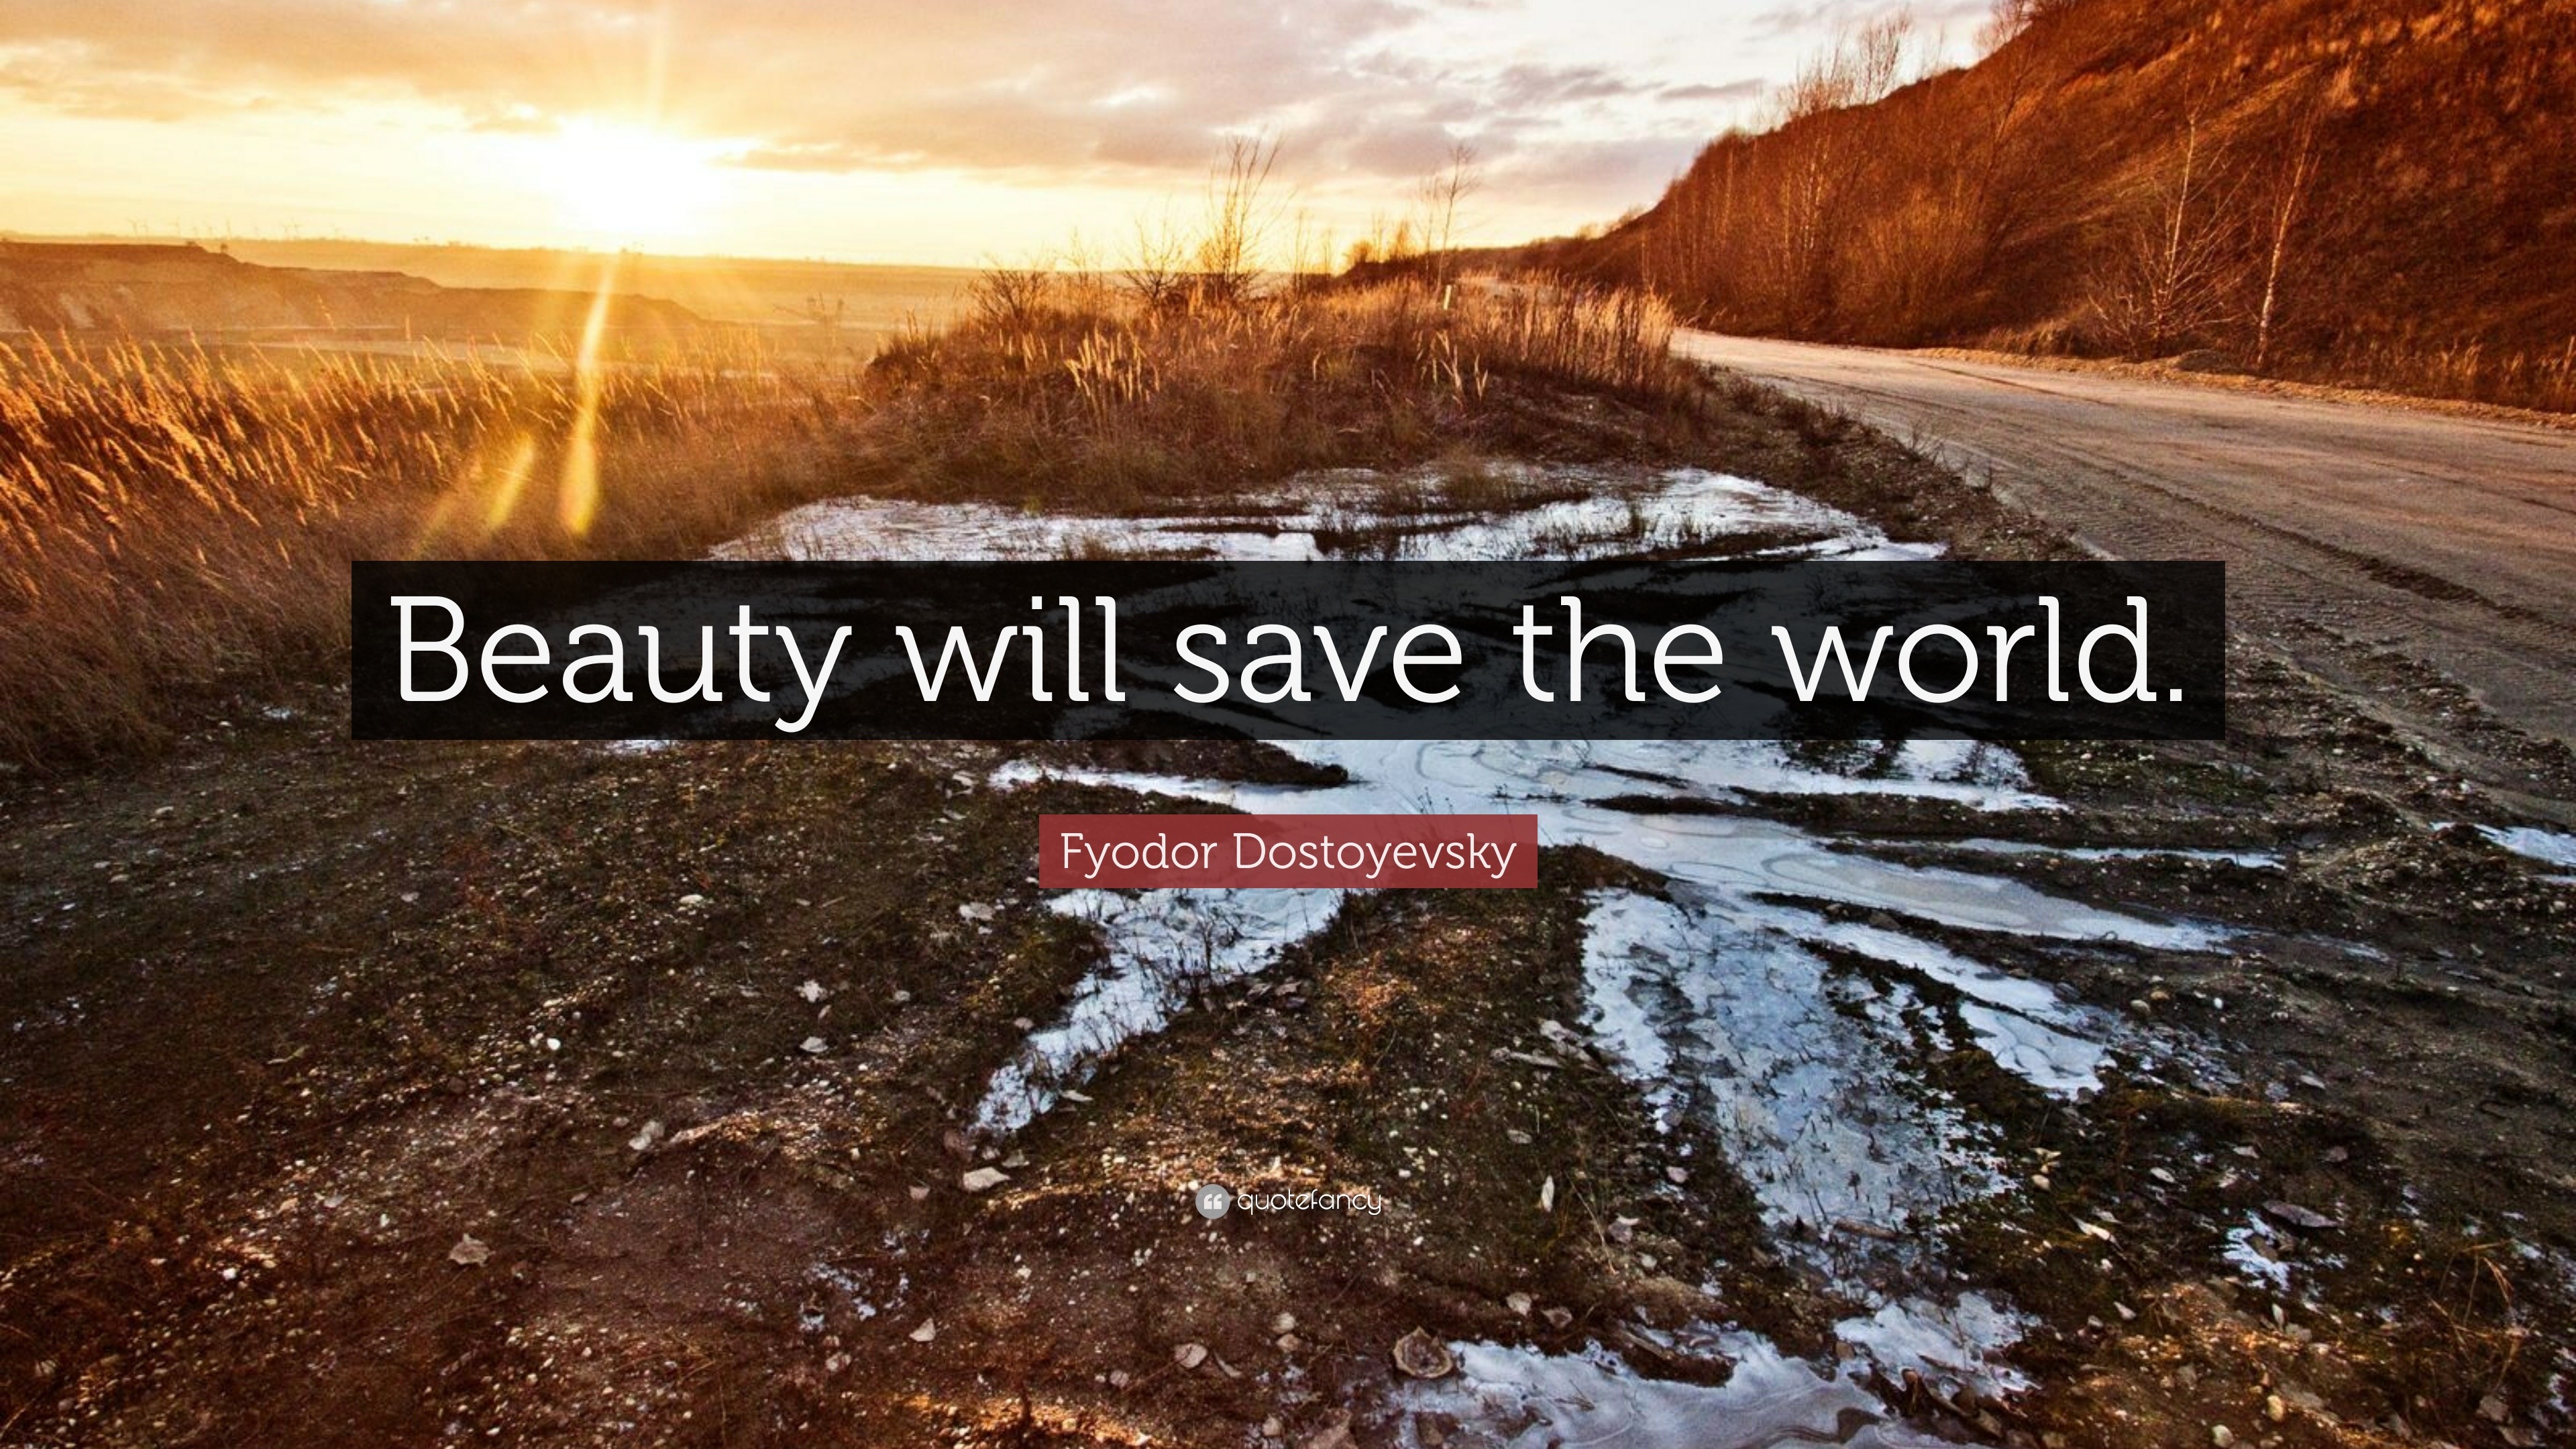 Fyodor Dostoyevsky Quote: “Beauty will save the world.”